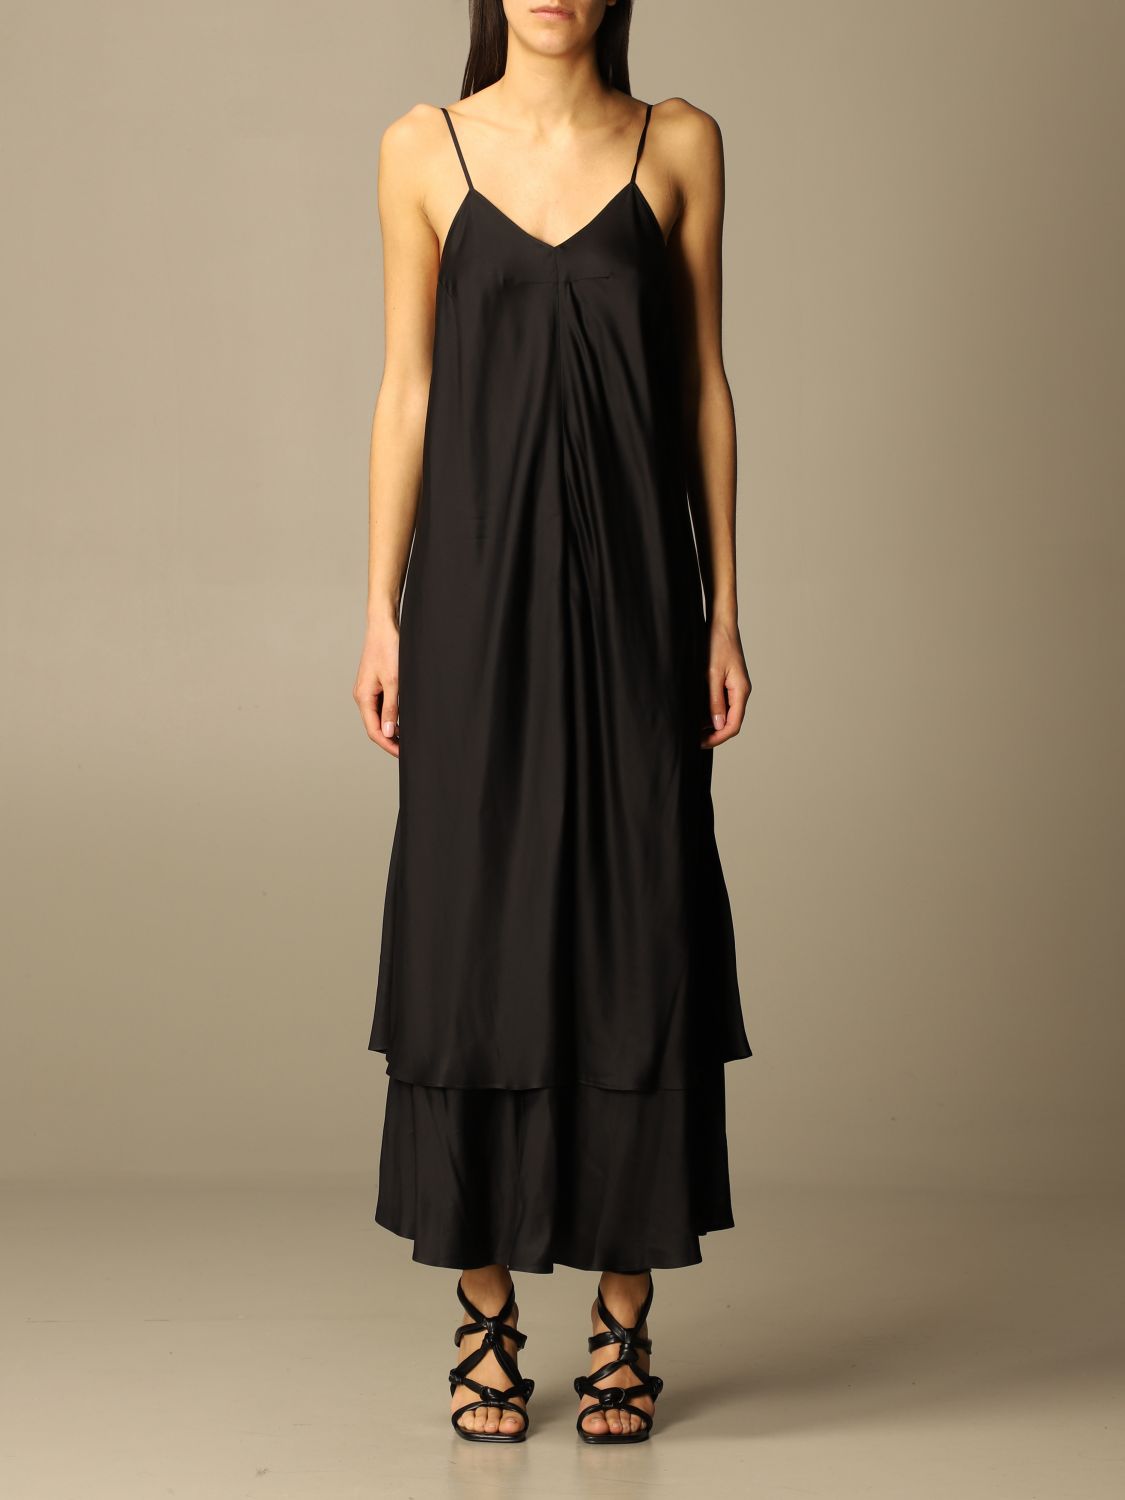 Maison Martin Margiela Black Dress | Dresses Images 2022